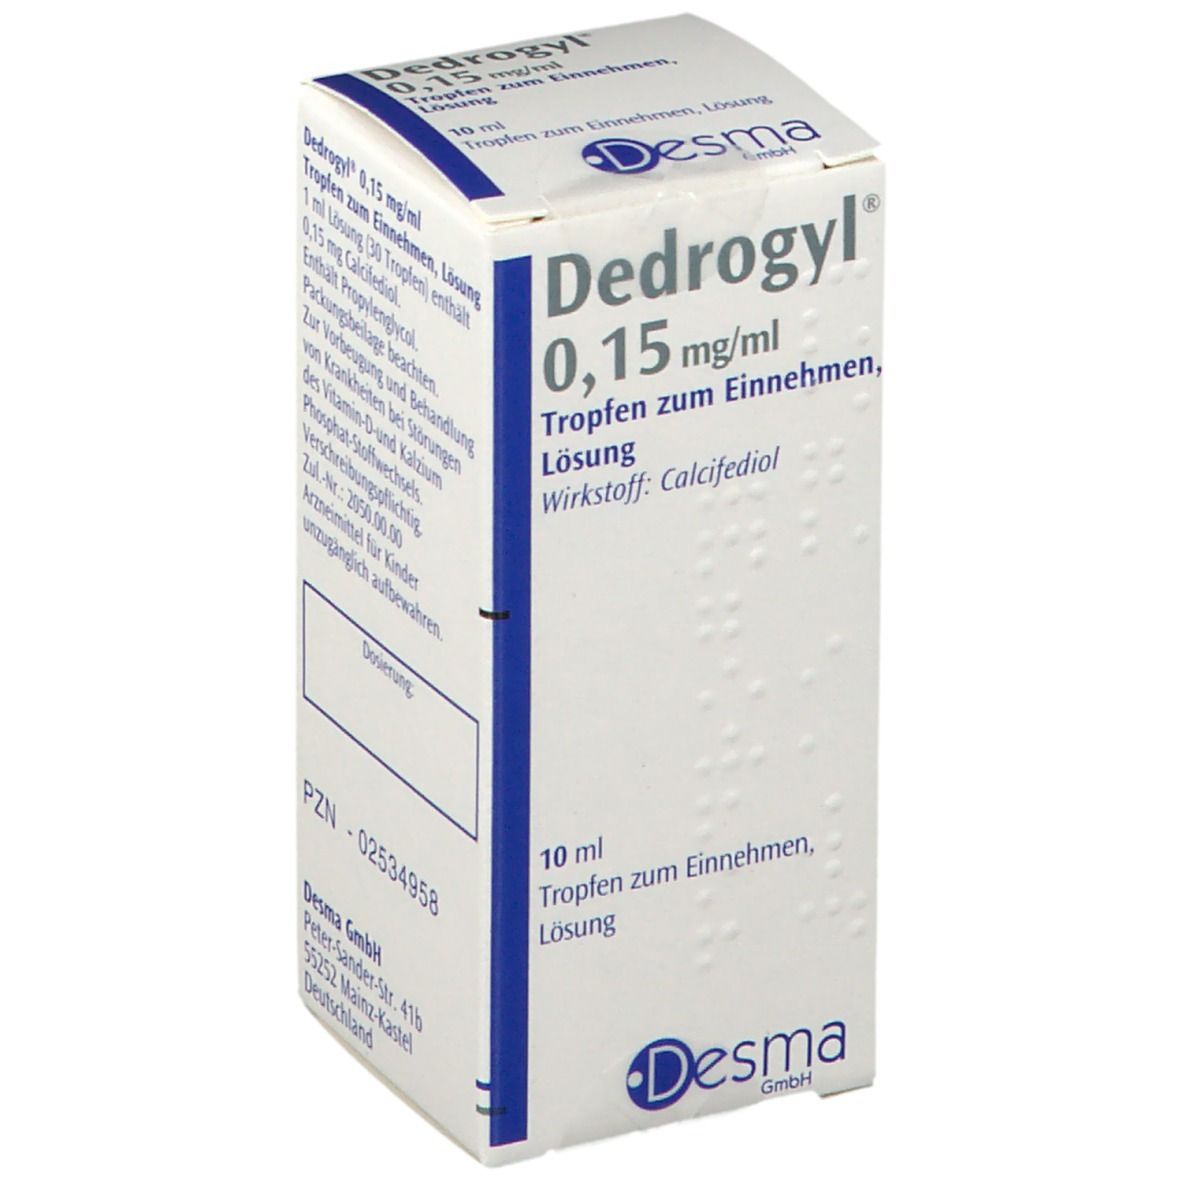 Dedrogyl® 0,15 mg/ml